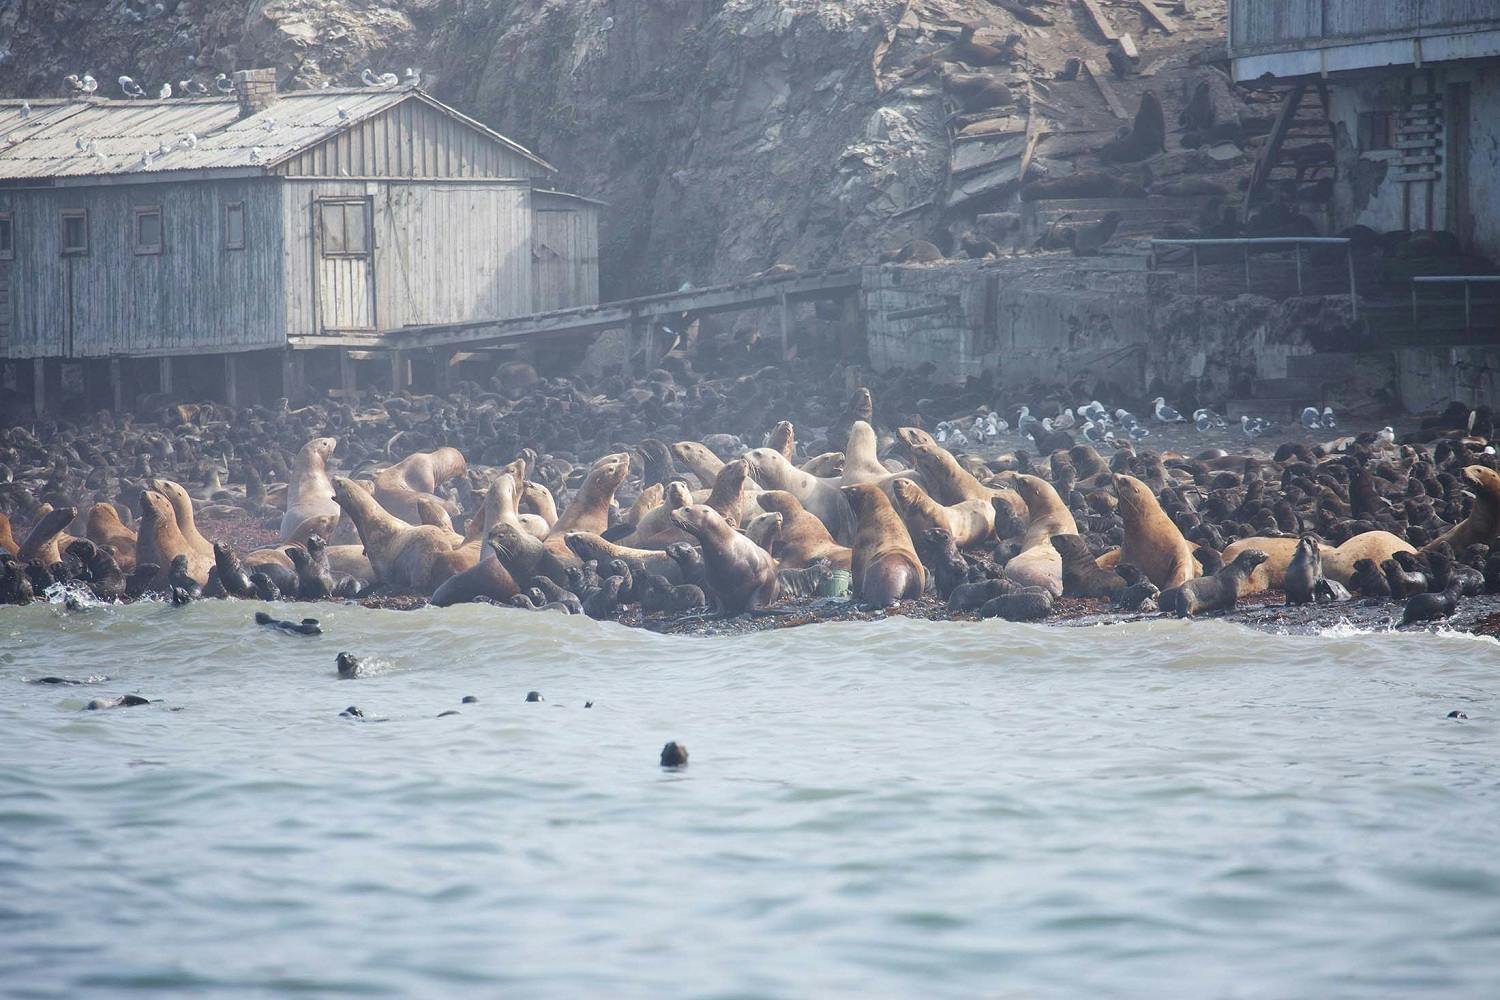 Fur seals in Tyuleniy Island in the Russian Far East